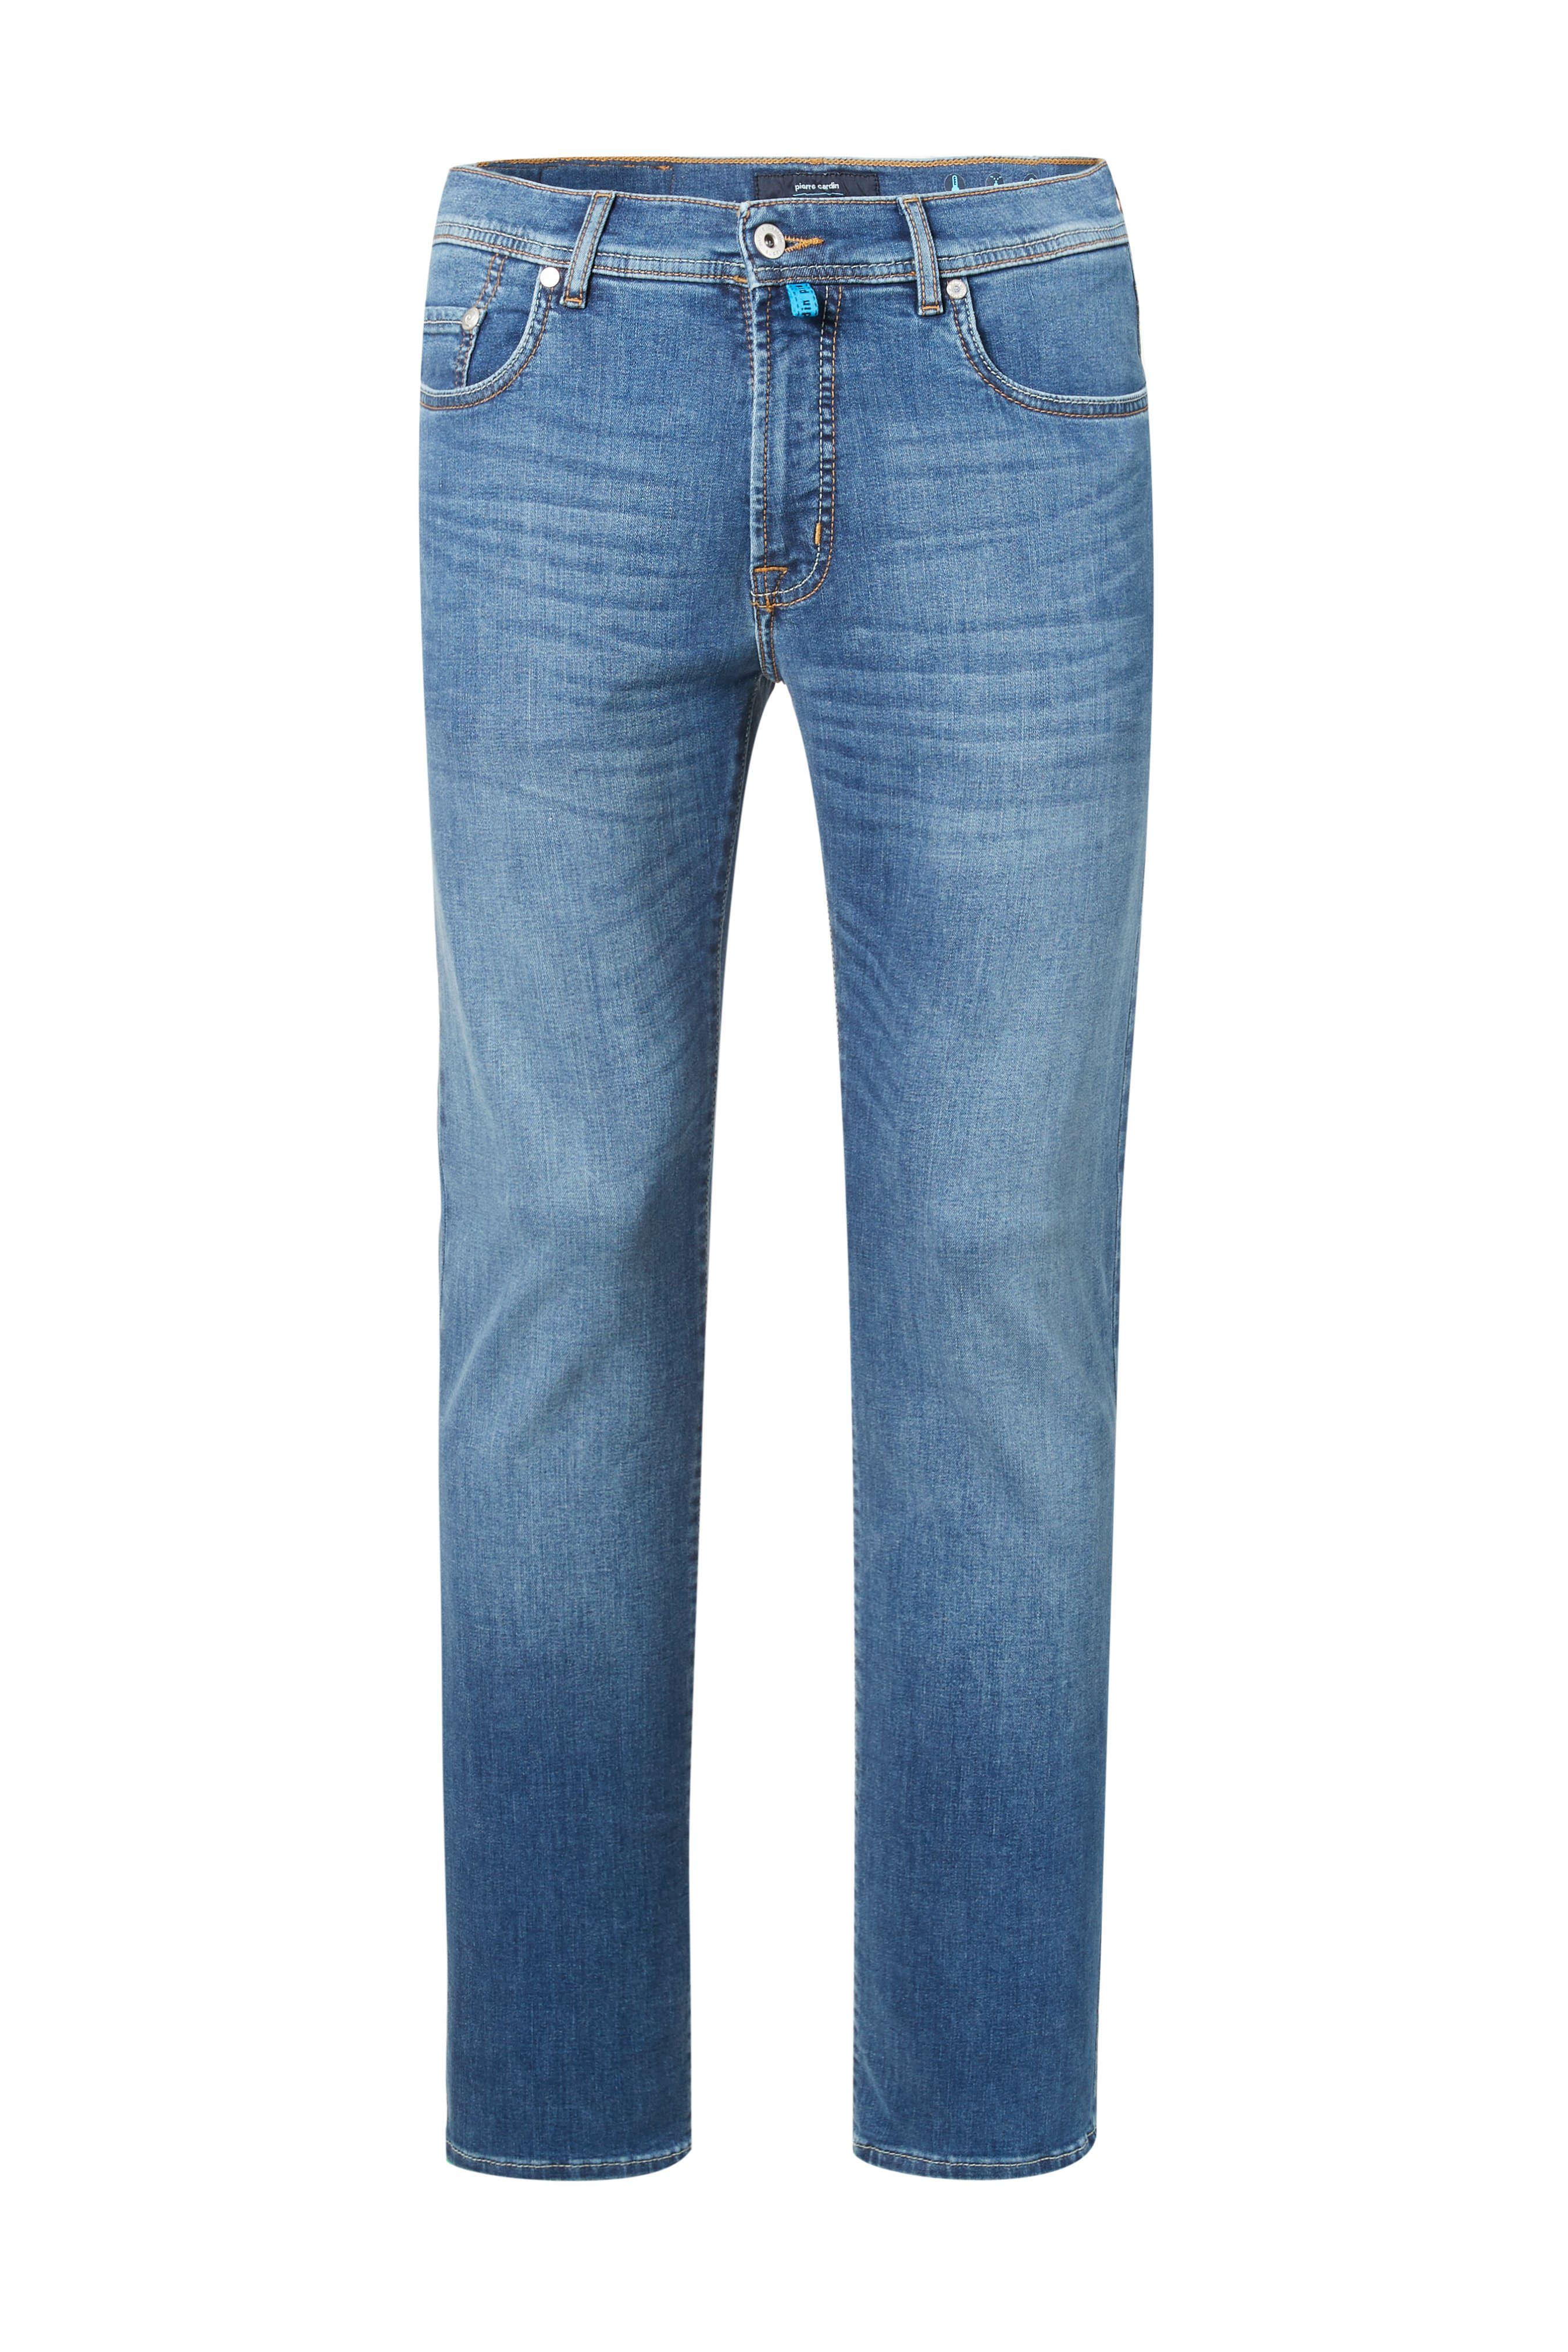 Pierre Cardin 5-Pocket-Jeans PIERRE CARDIN LYON washed out retro blue 30915 7719.03 - CLIMA CONTROL